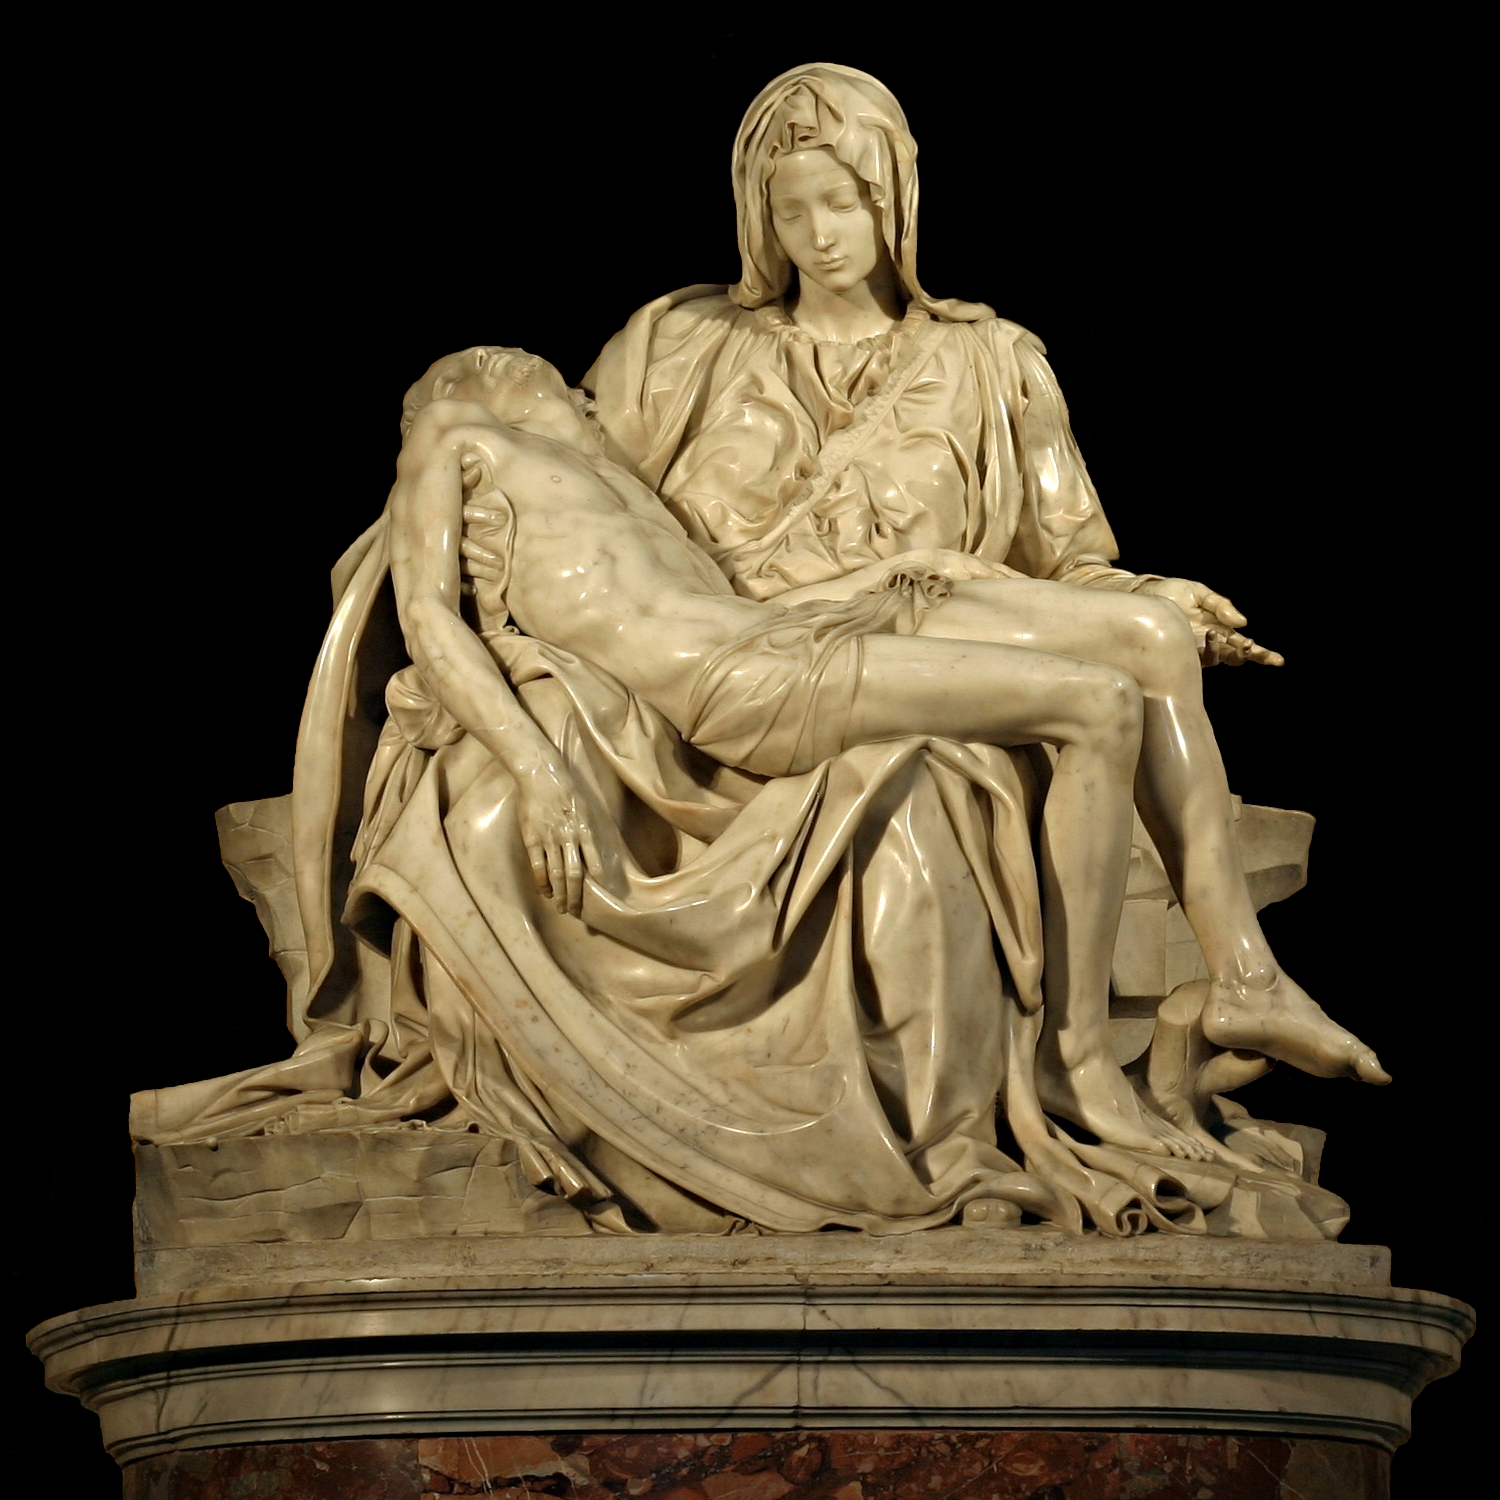 Pieta by Michelangelo Buonarotti (Photo: Wikipedia)